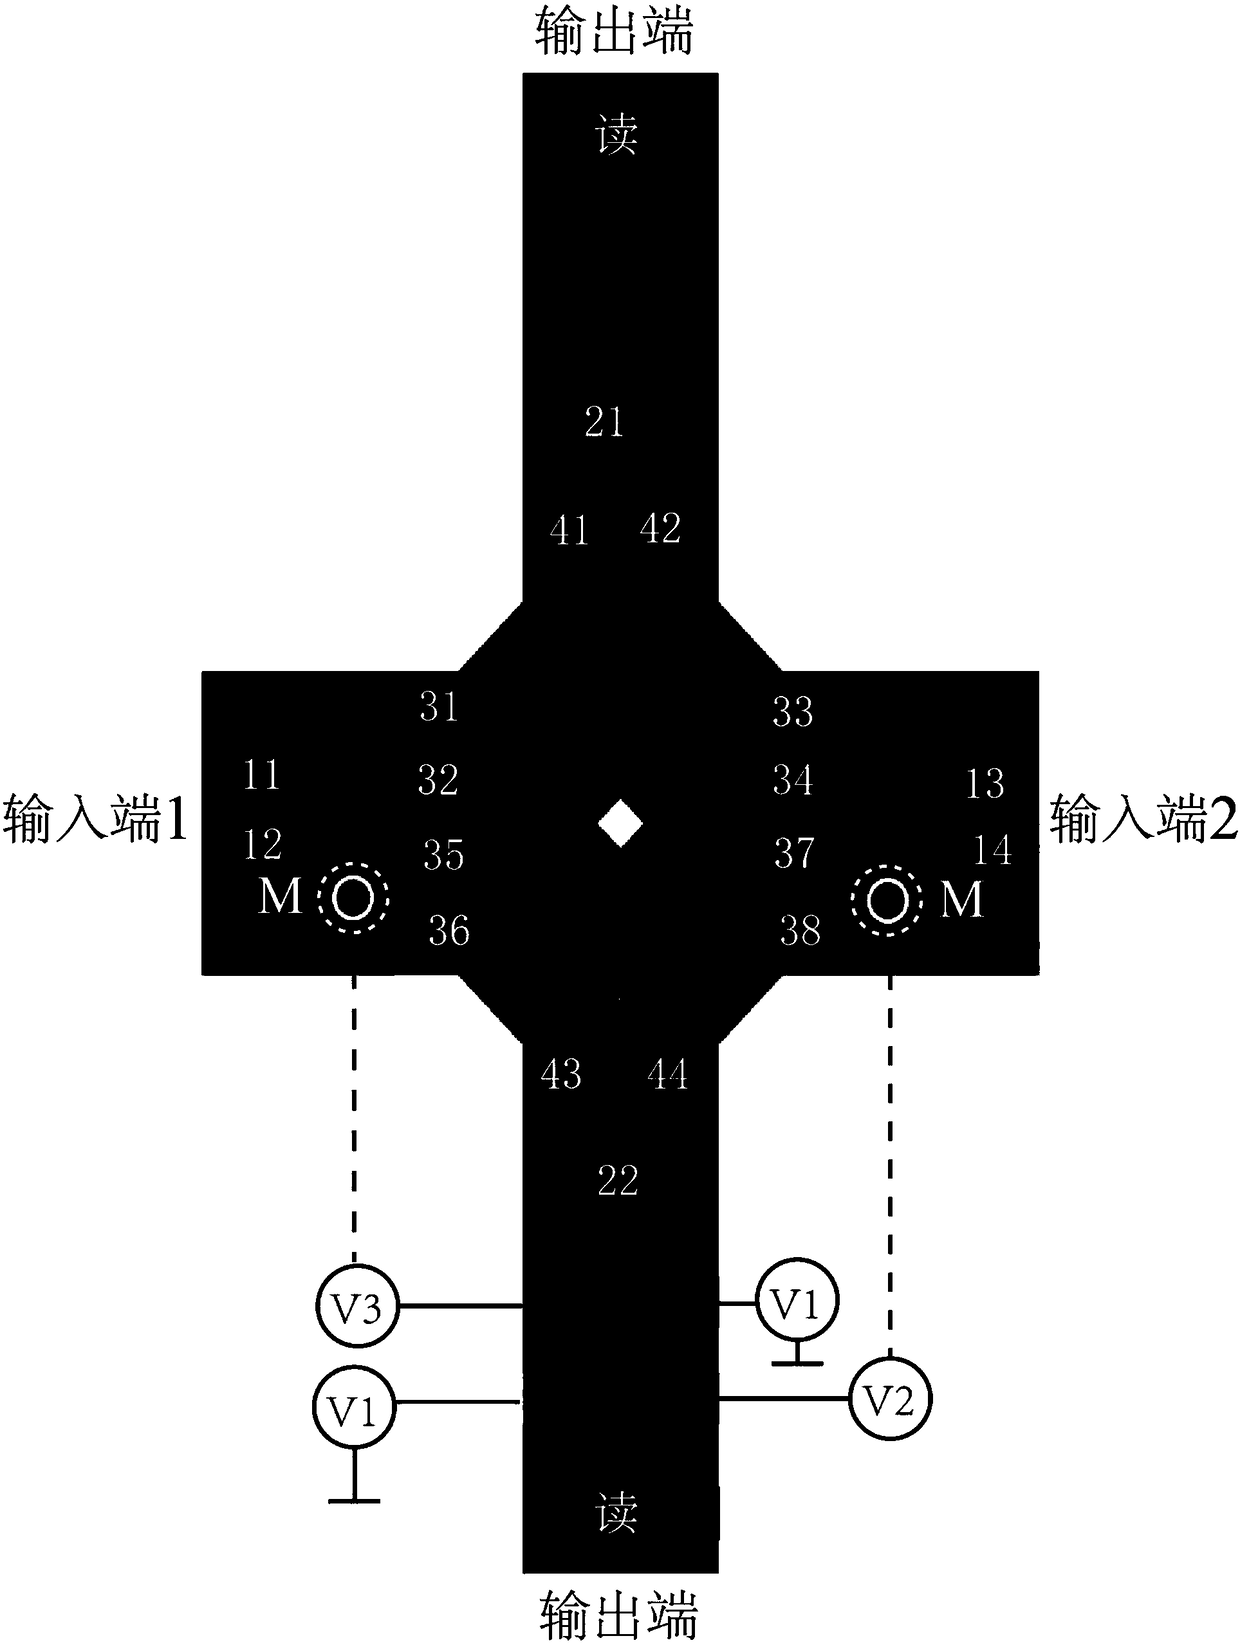 Reconfigurable logic gate based on magnetic Skyrmion